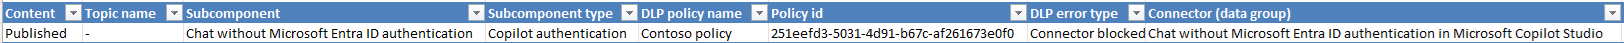 Screenshot of the DLP download spreadsheet.